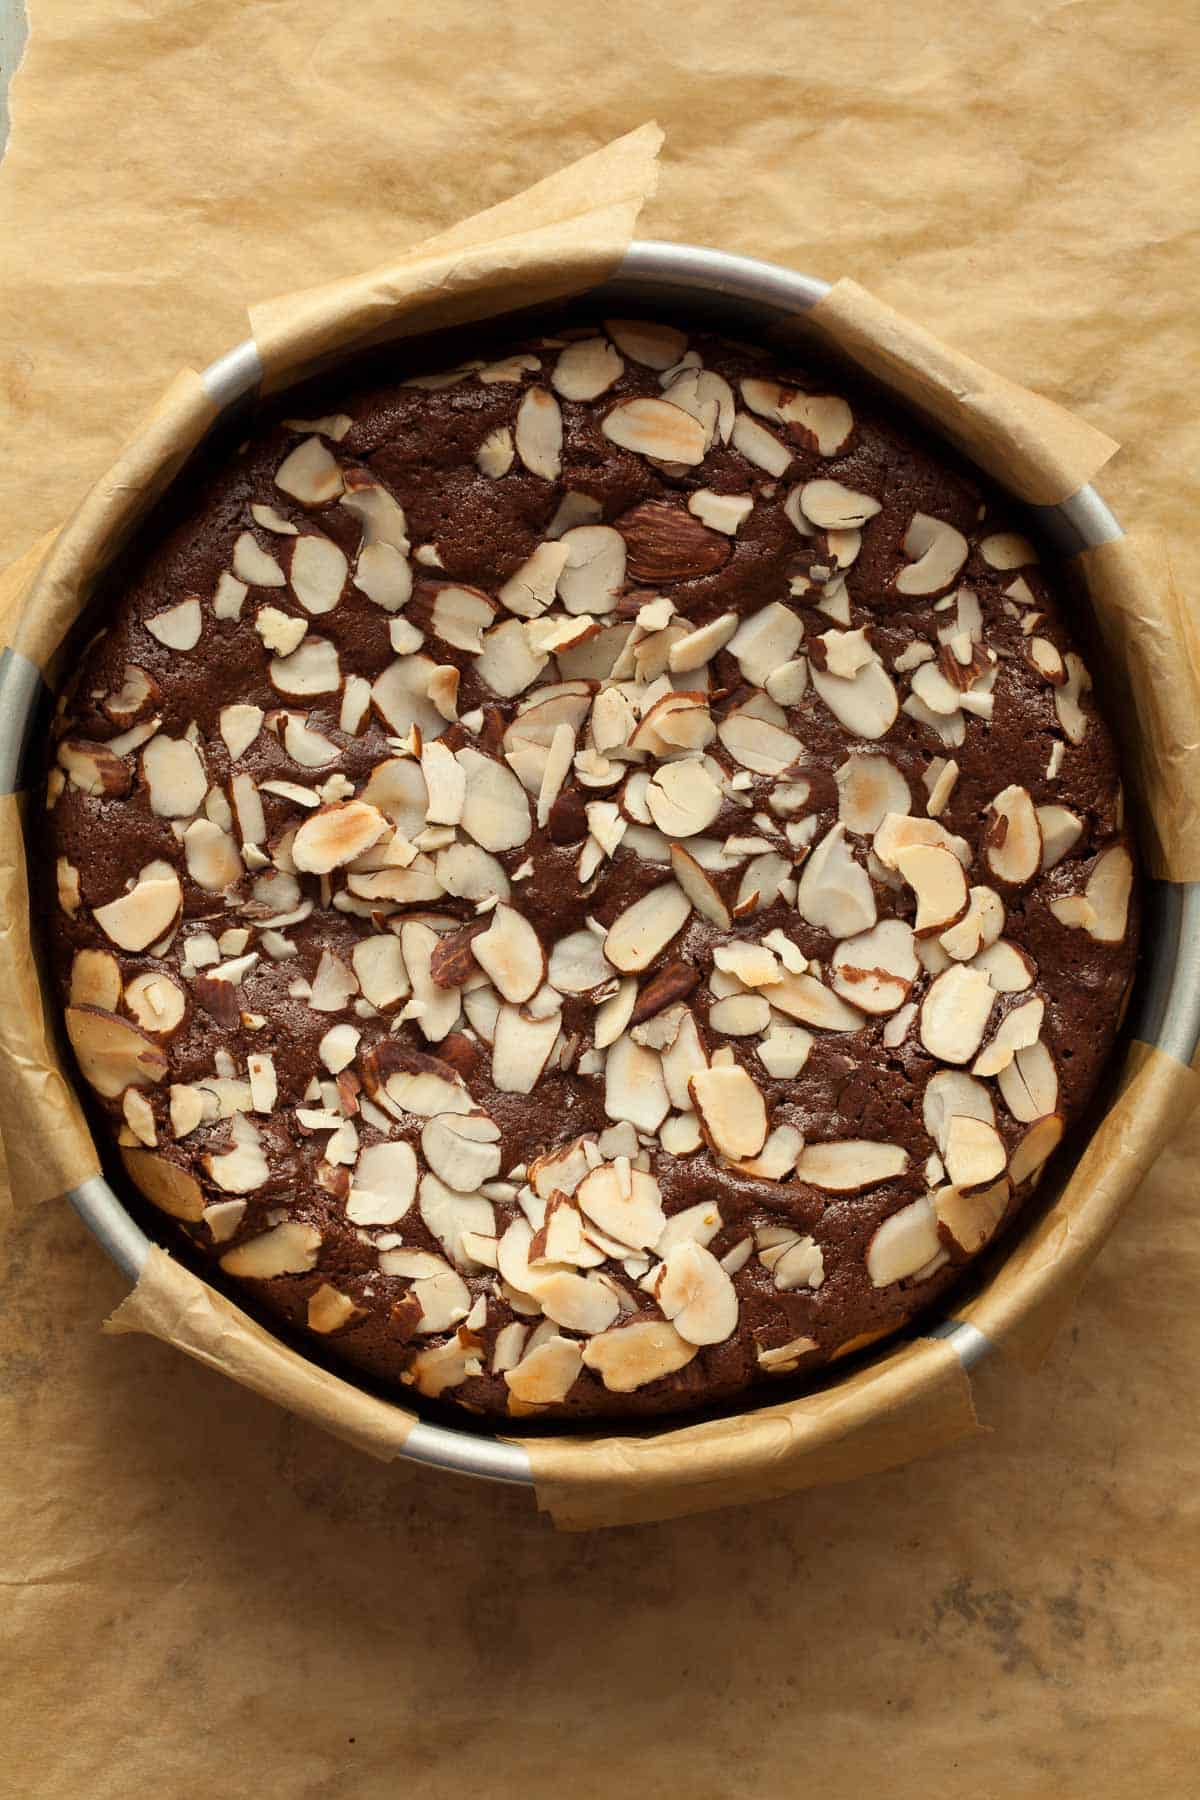 Chocolate Almond Torte in Cake Pan